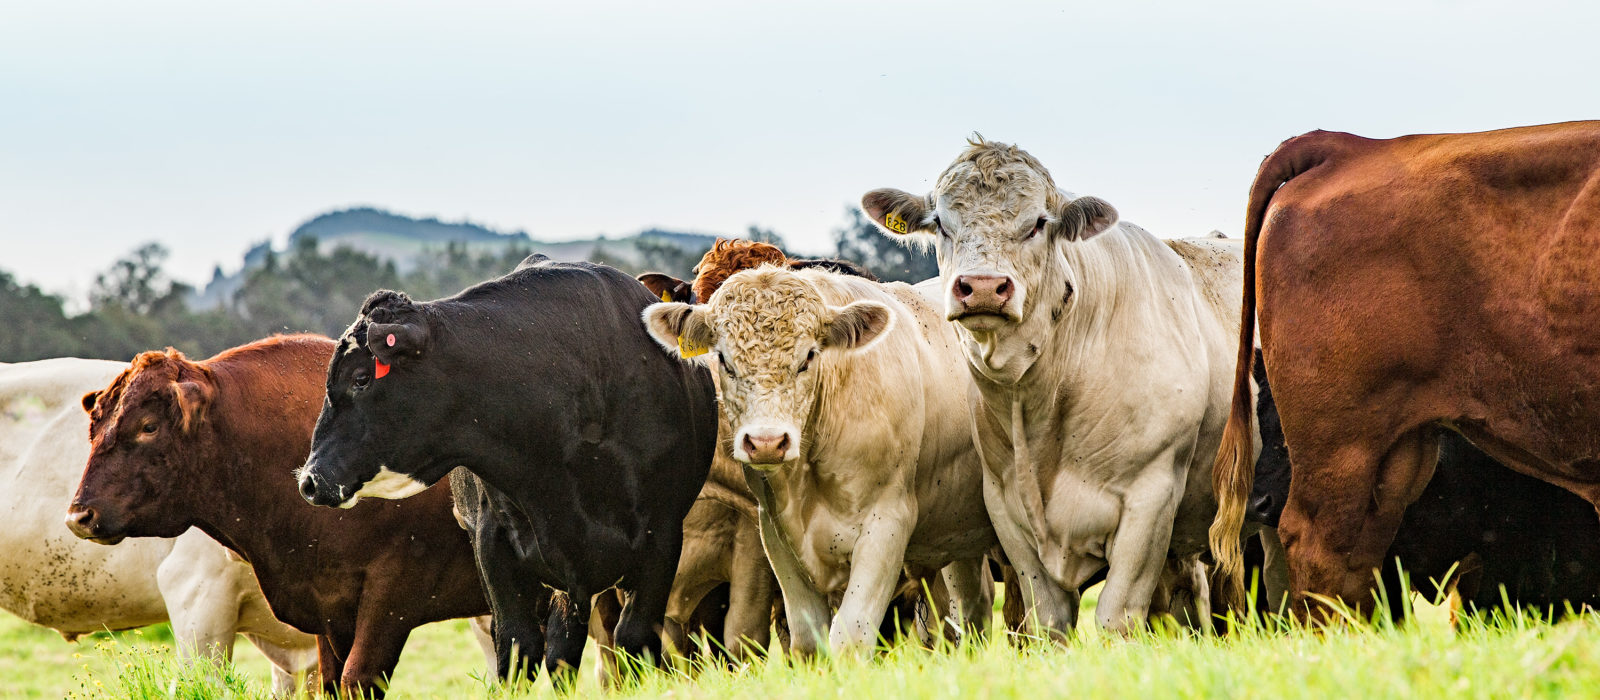 Multi-colored cows in a field crop